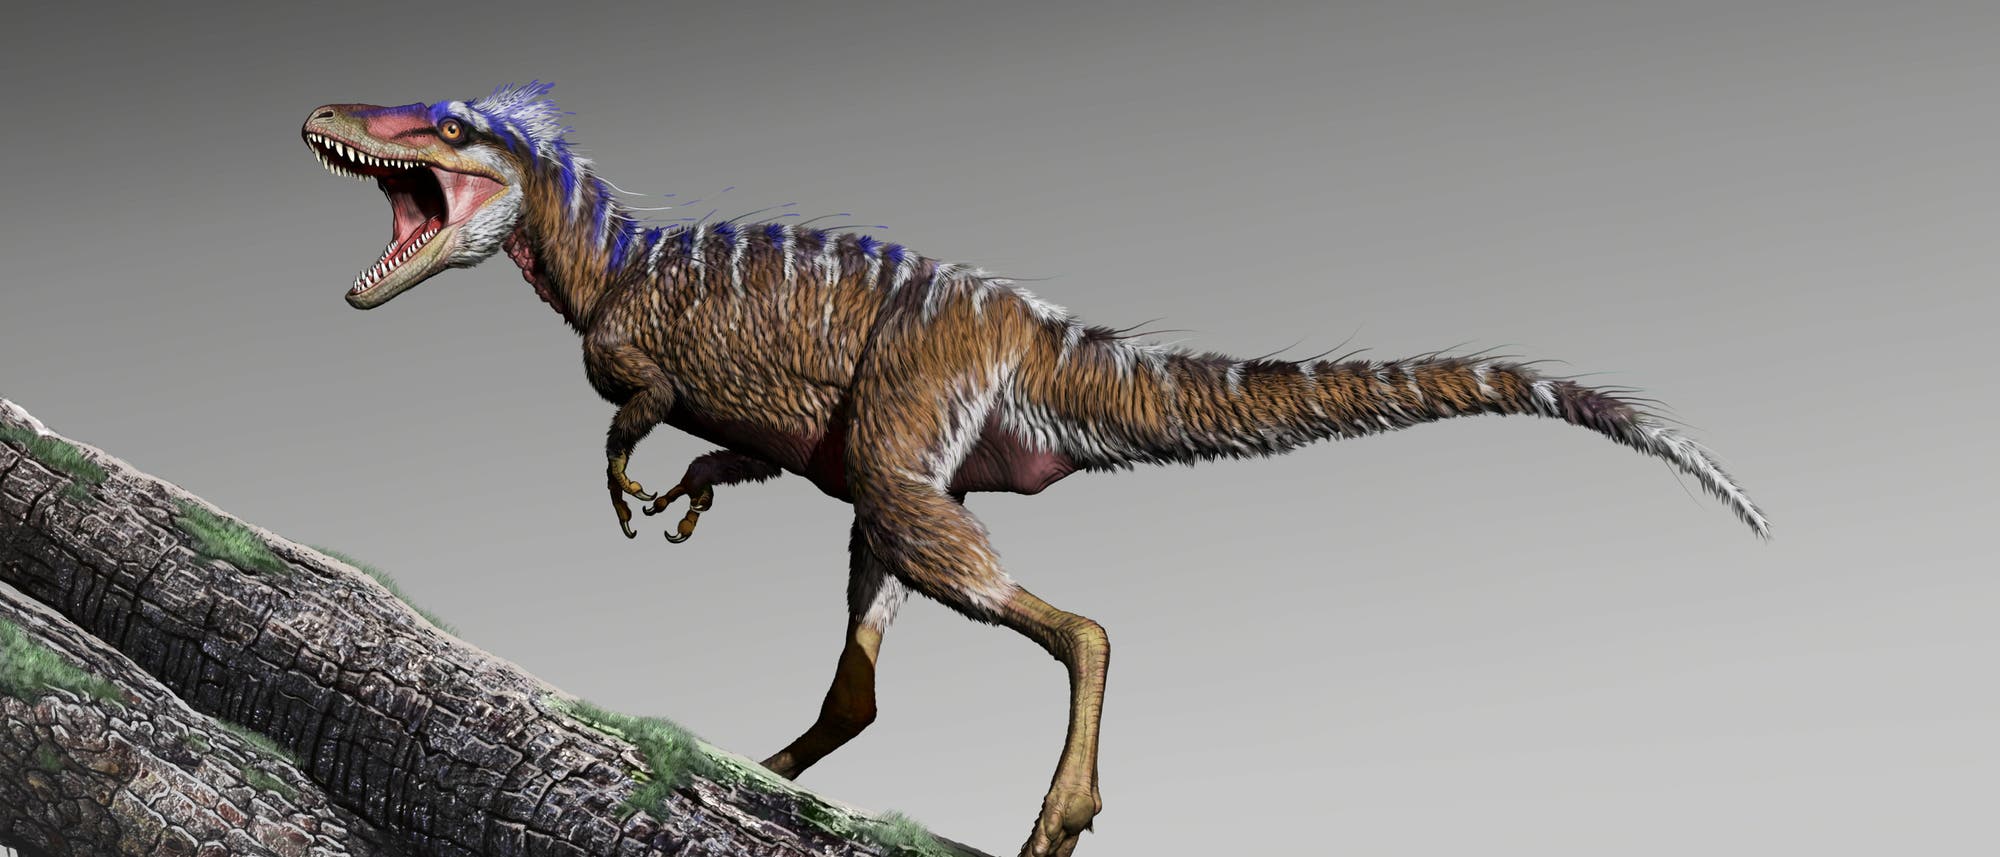 Neu entdeckter Dinosaurier in Lebendrekonstruktion